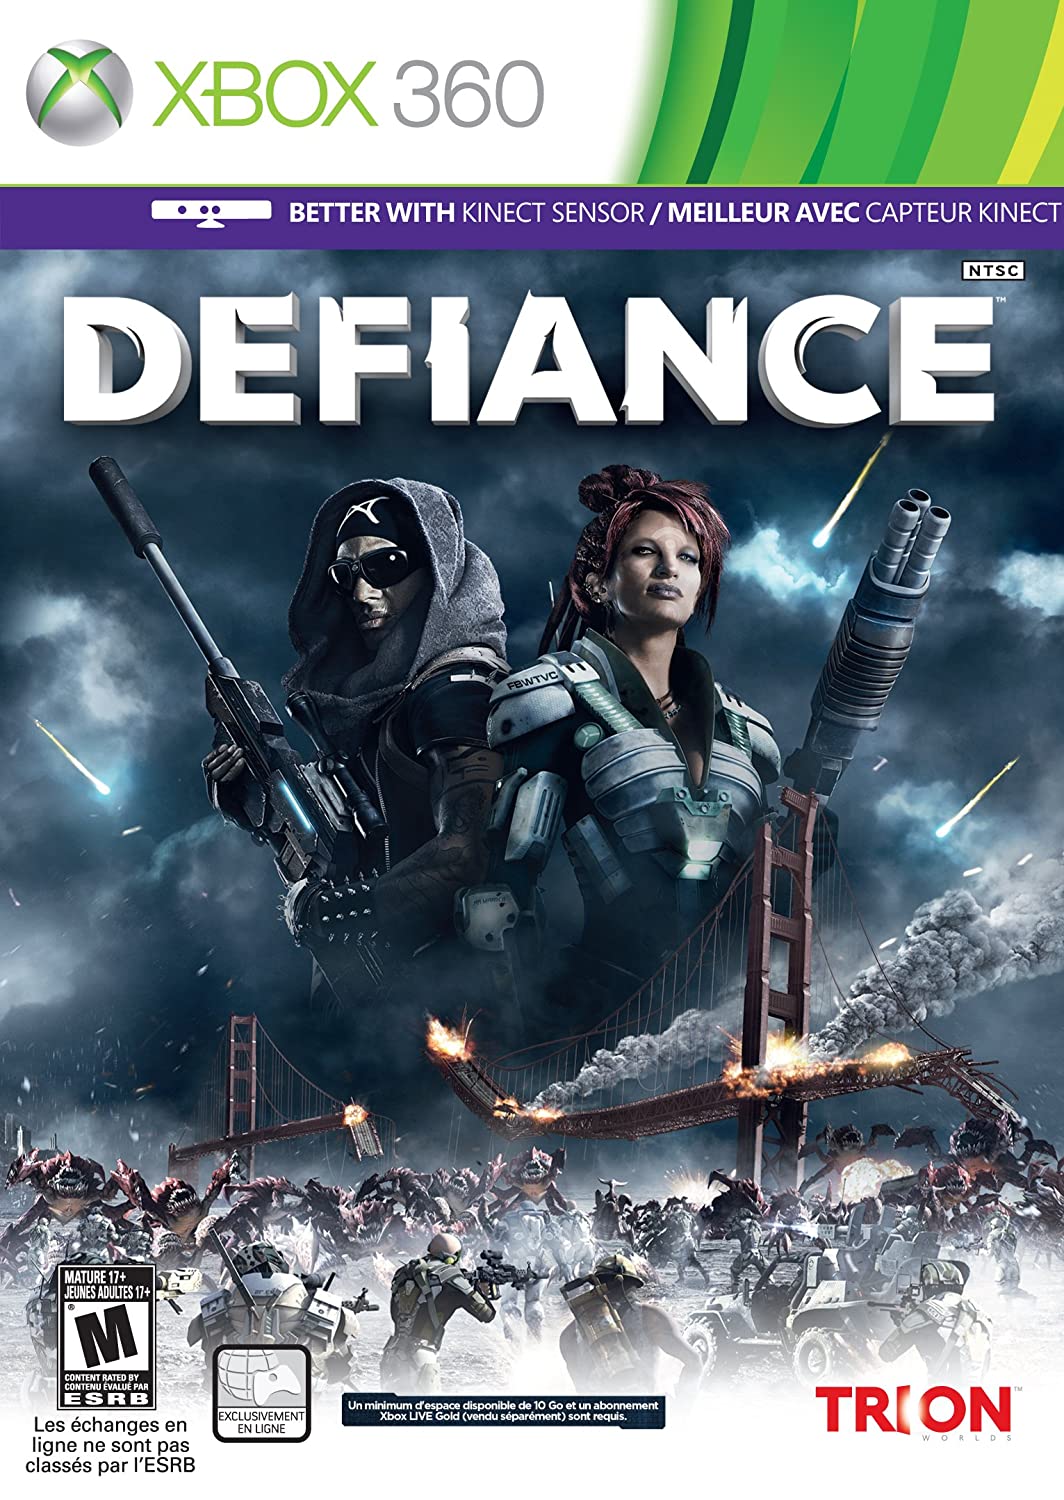 Defiance - Darkside Records